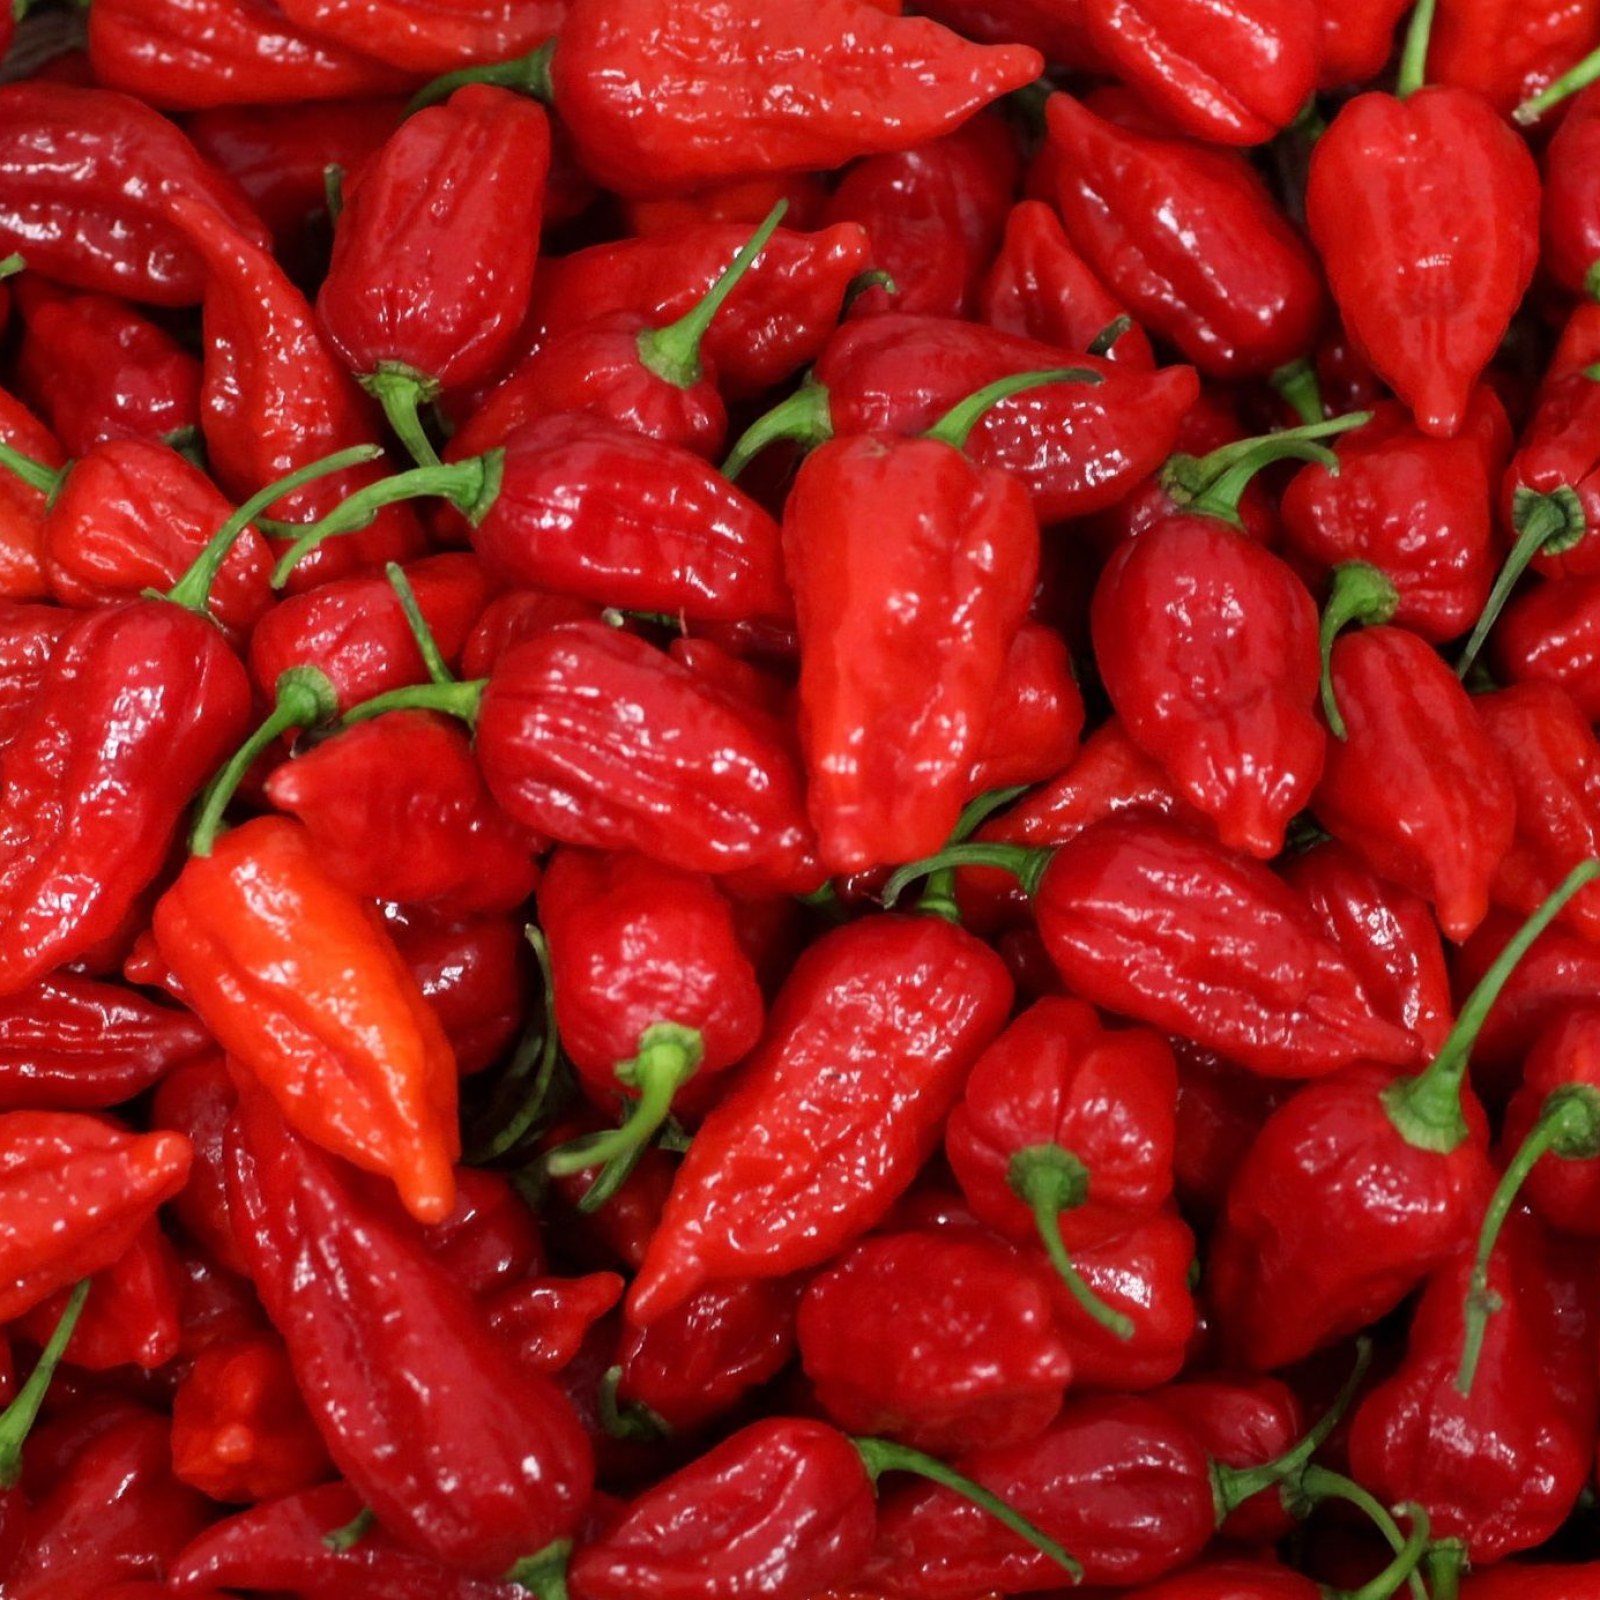 Carolina Reaper: The Hottest Chili on Earth